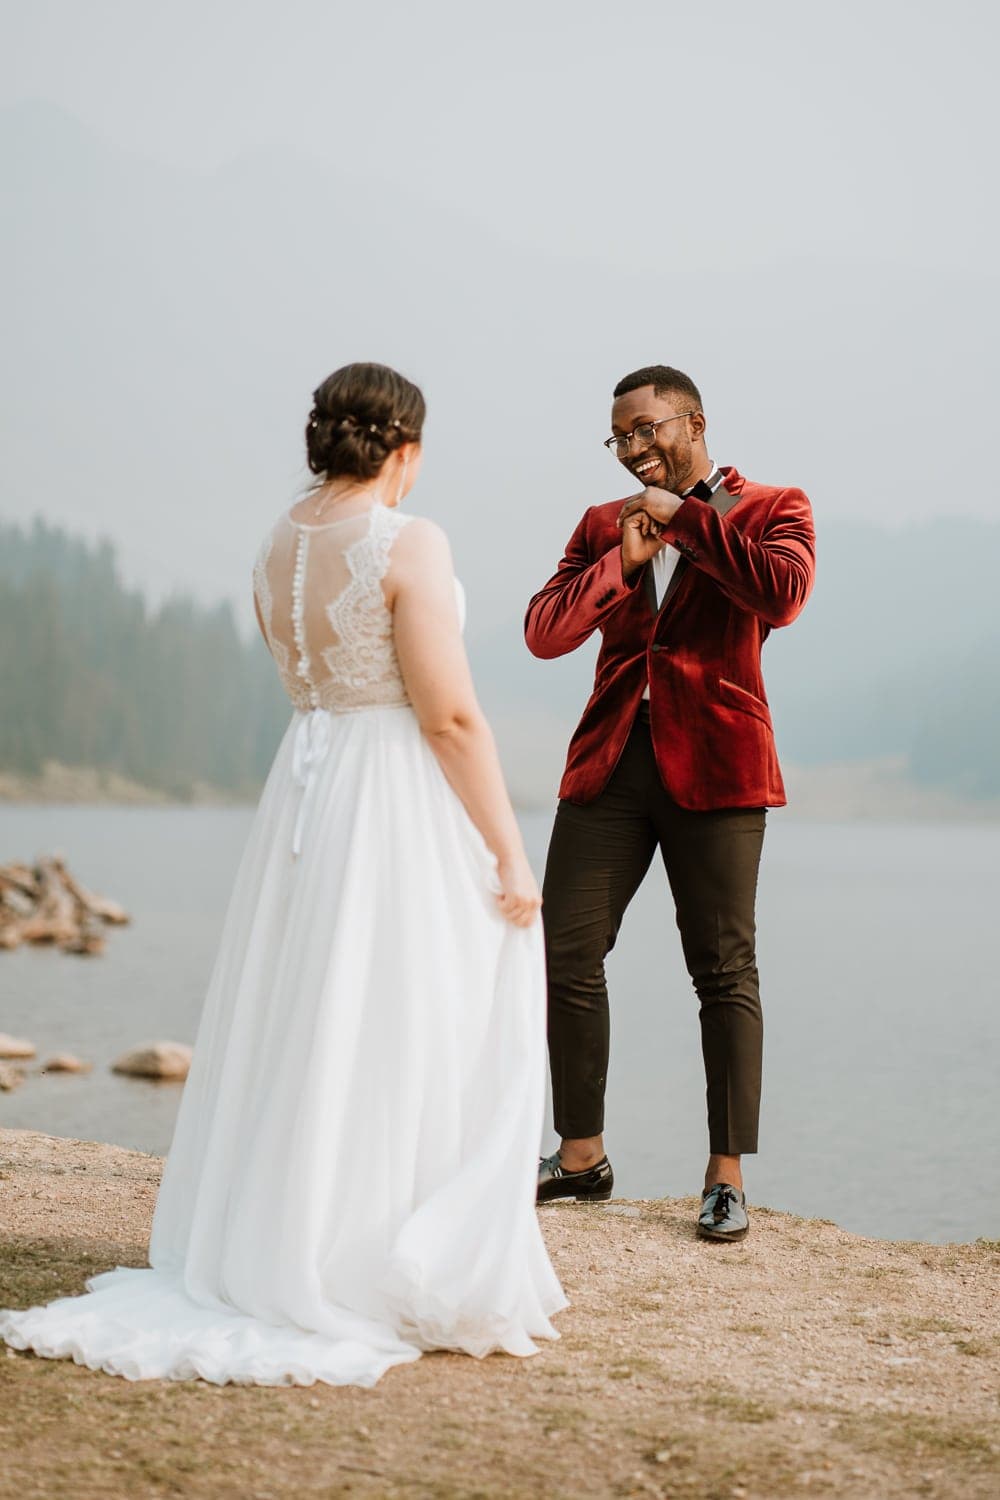 https://www.paigeweberphotography.com/wp-content/uploads/2020/01/how-to-plan-an-elopement-groom-dances-during-first-look-2.jpeg